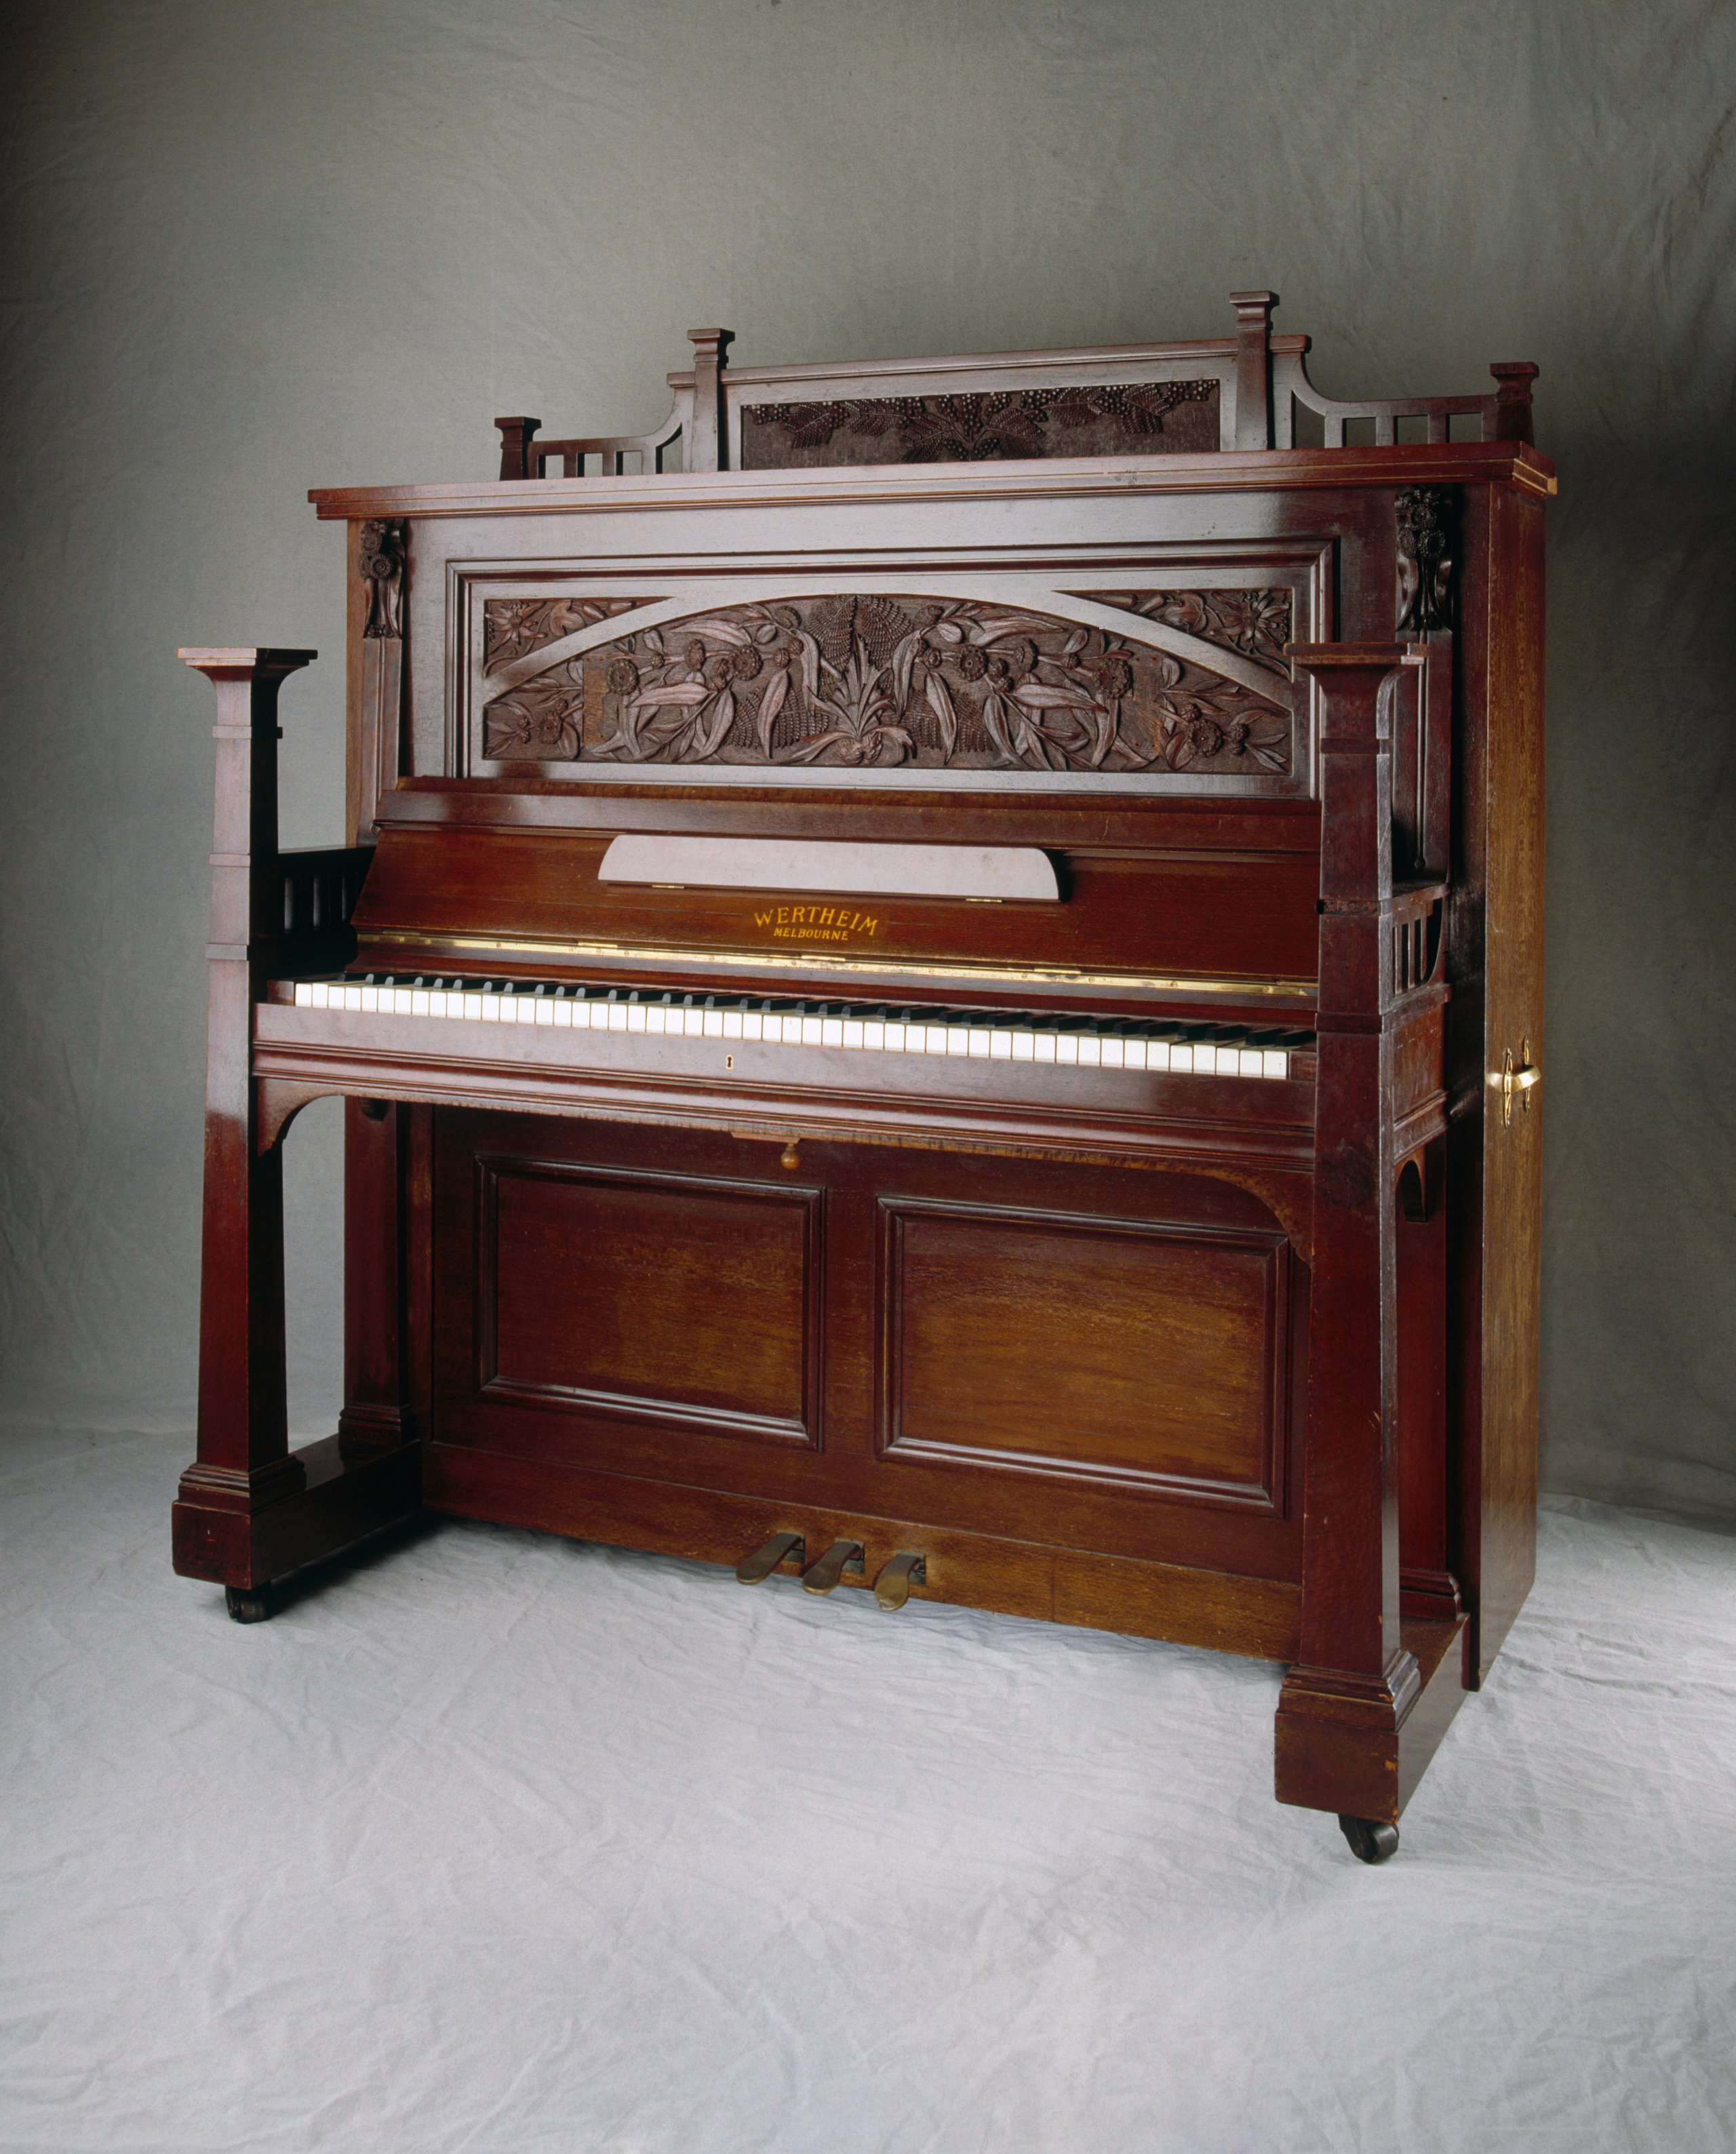 Upright Upright pianoforte made by Wertheim